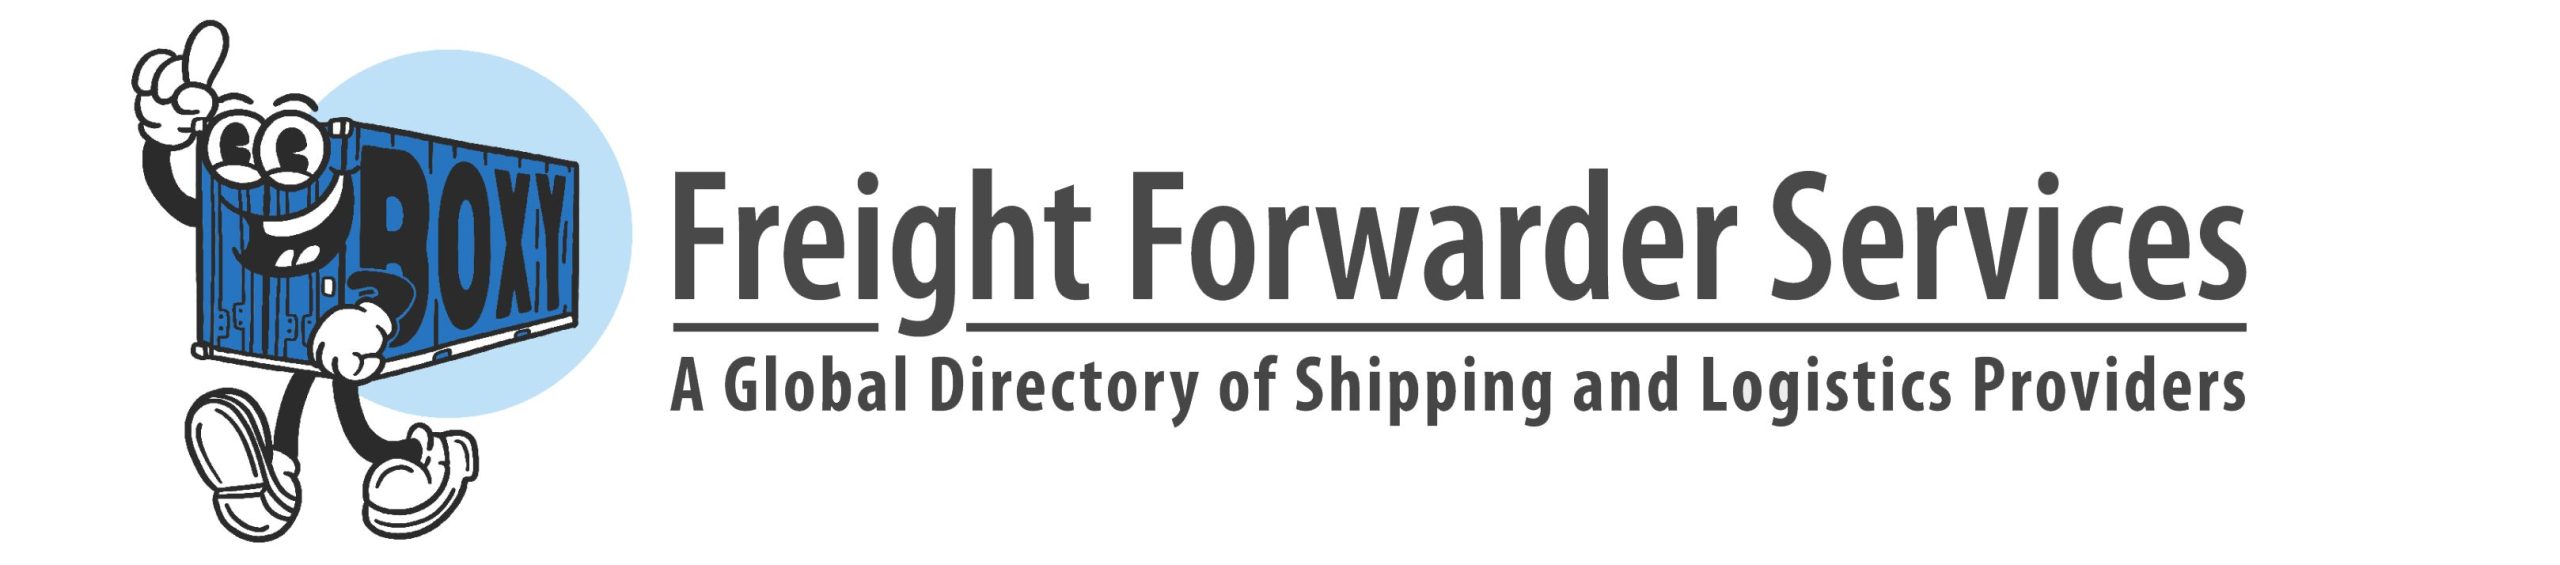 freight-forwarder-services-logo